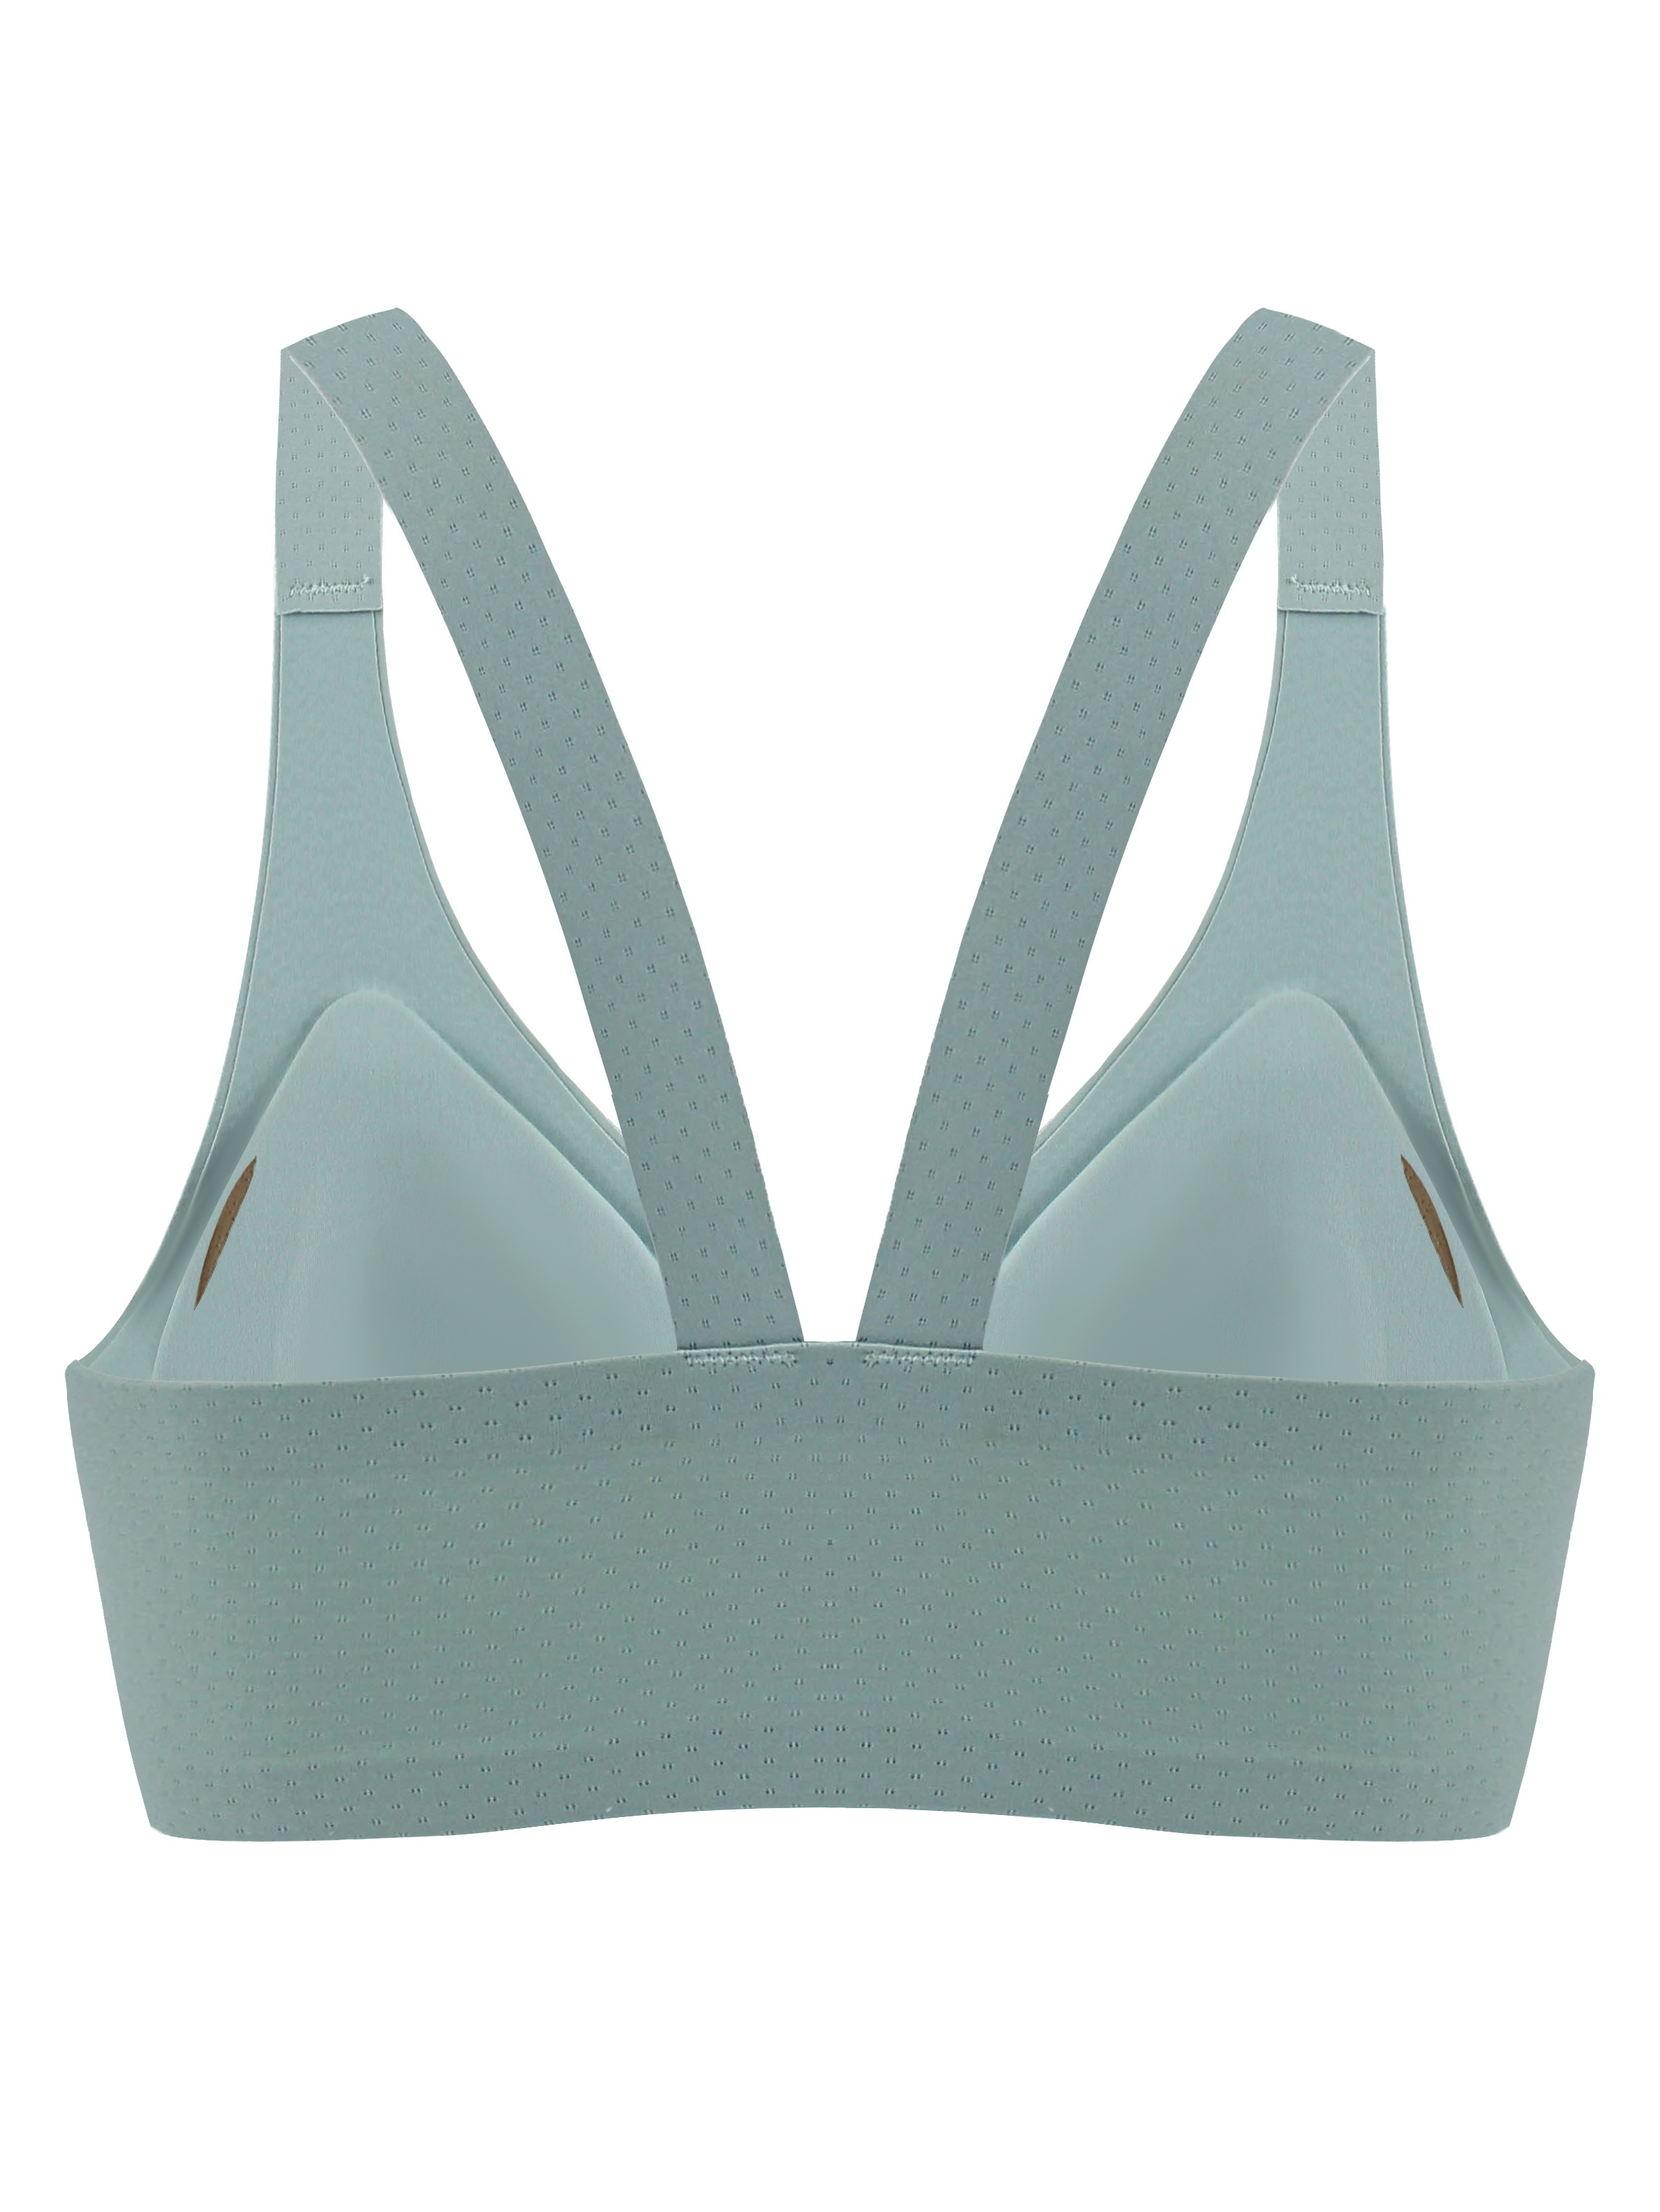 JNGSA Women's Longline Bras Comfort Minimizer Bra, Full-coverage No  Underwire Bra,Seamless Push Up Breathable Everyday Bras Gray